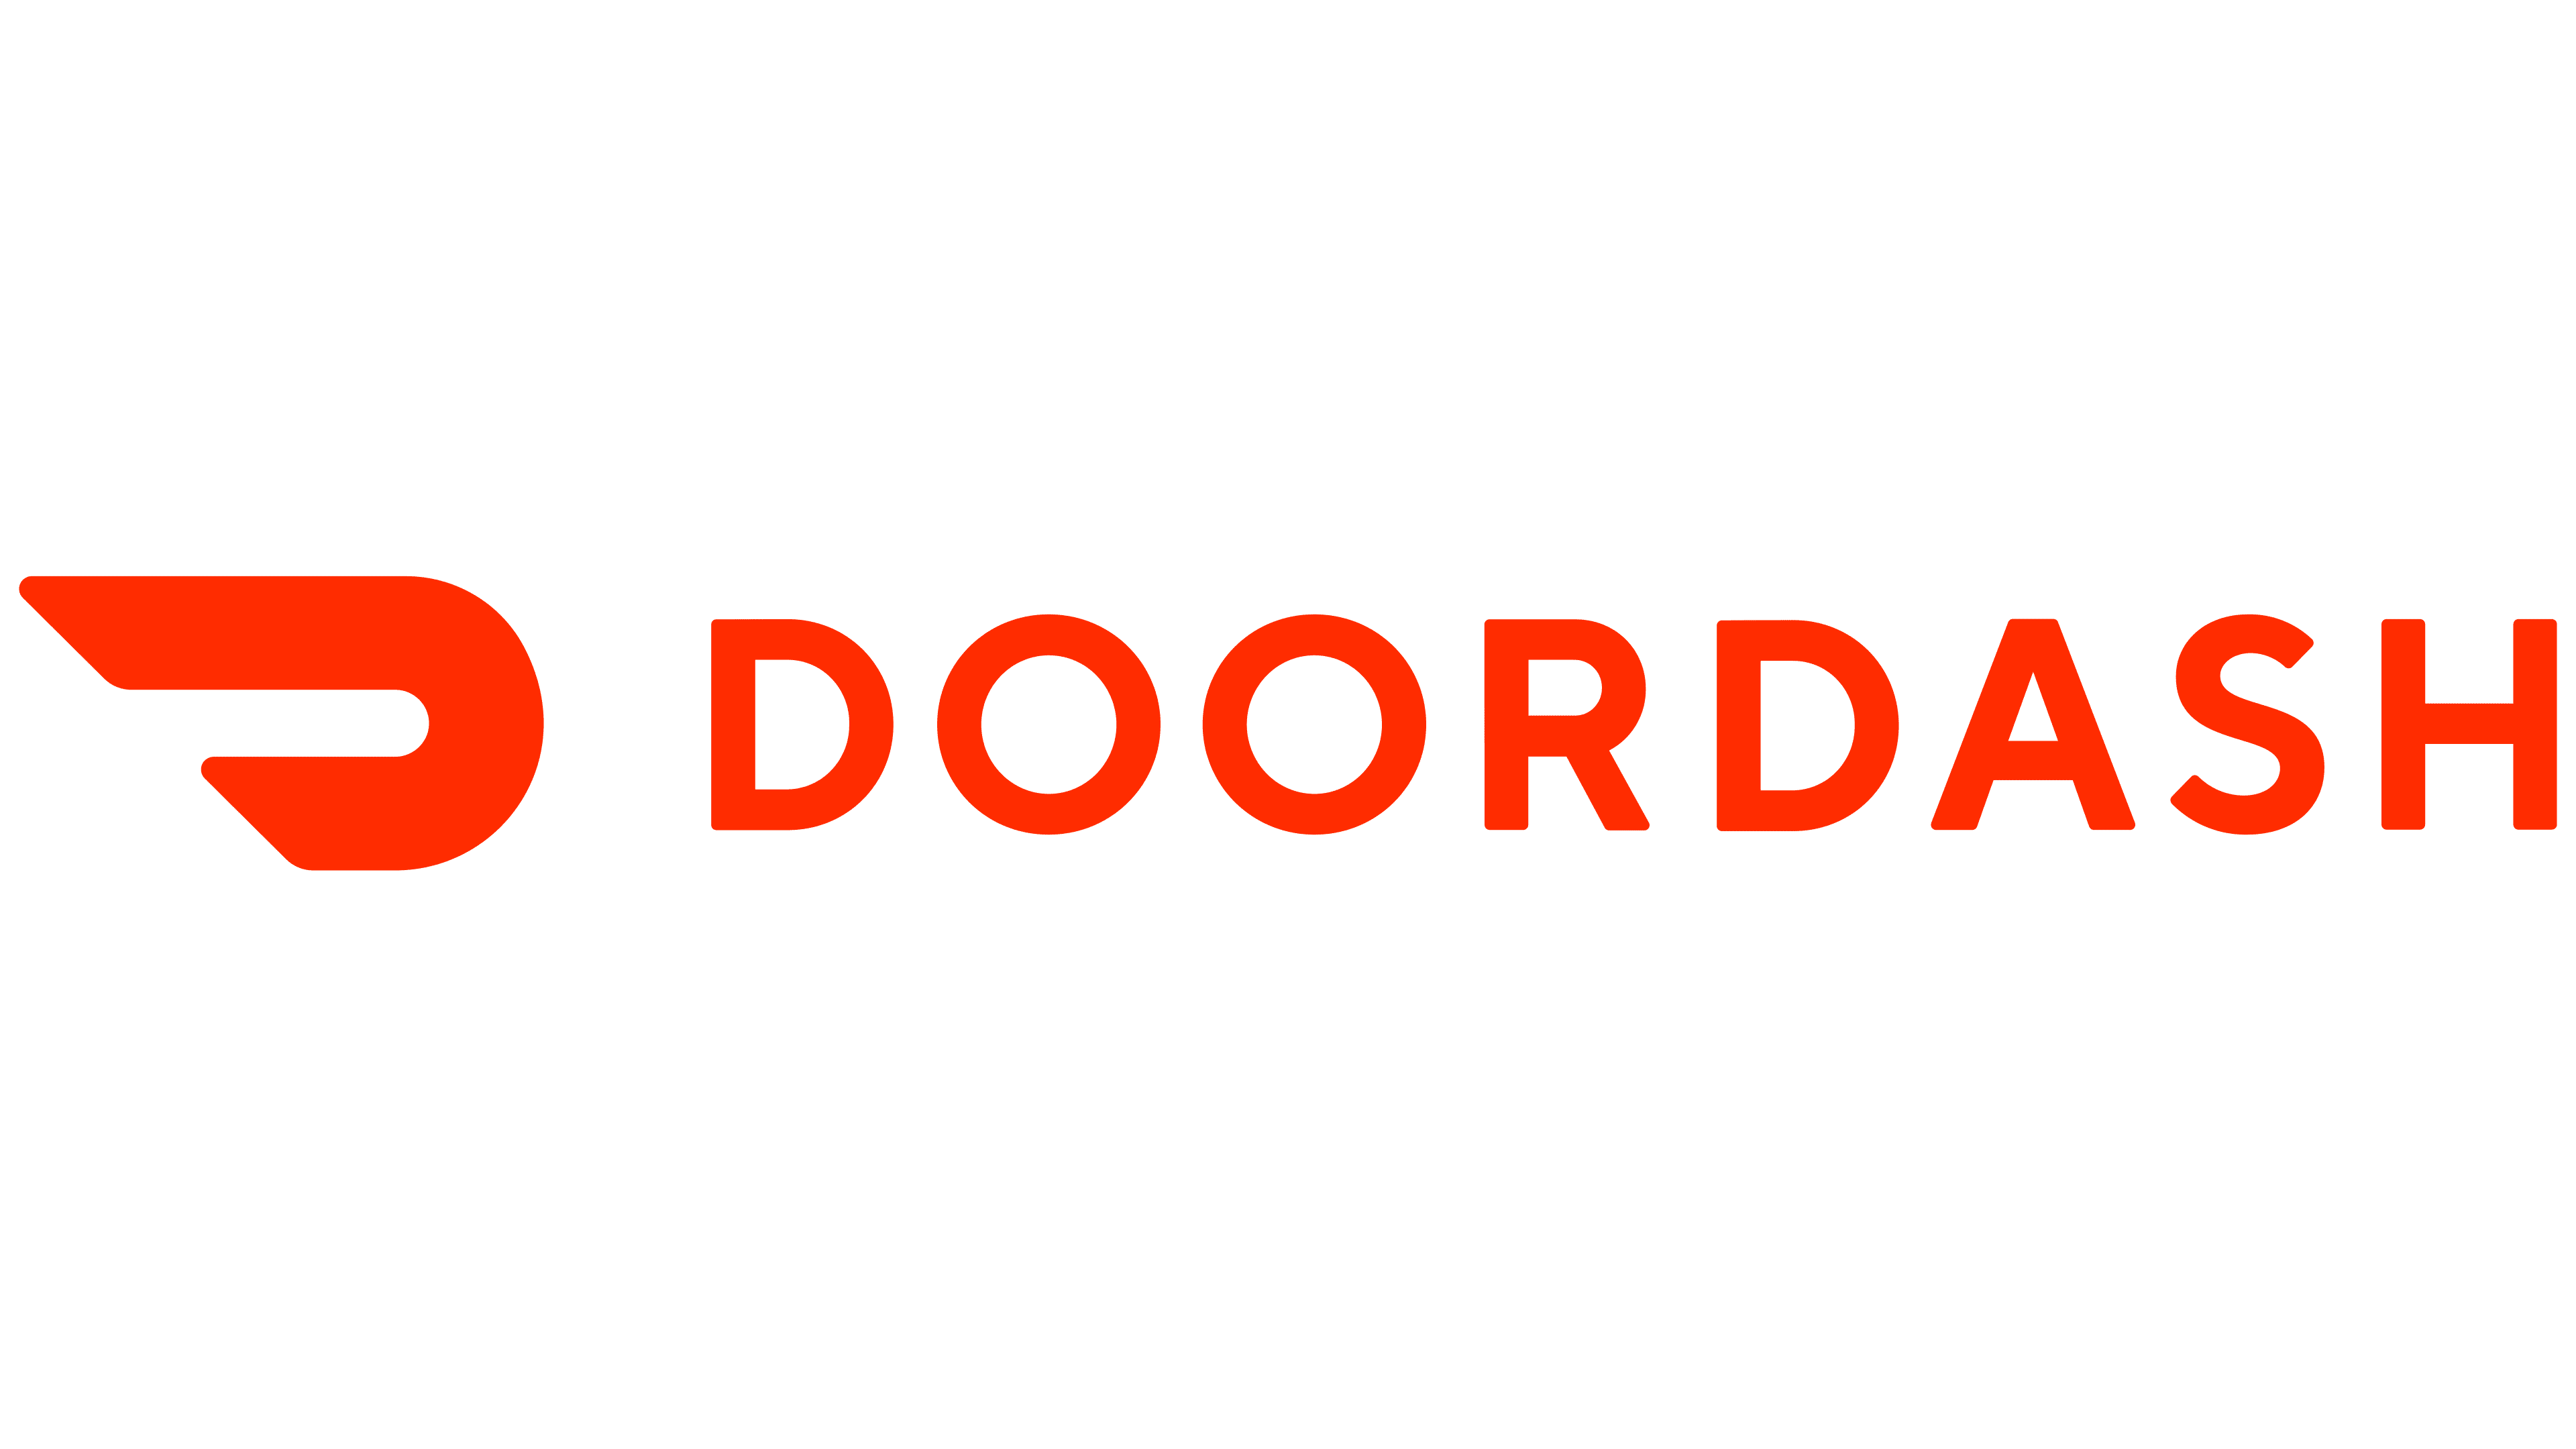 Doordash company logo on a green background.